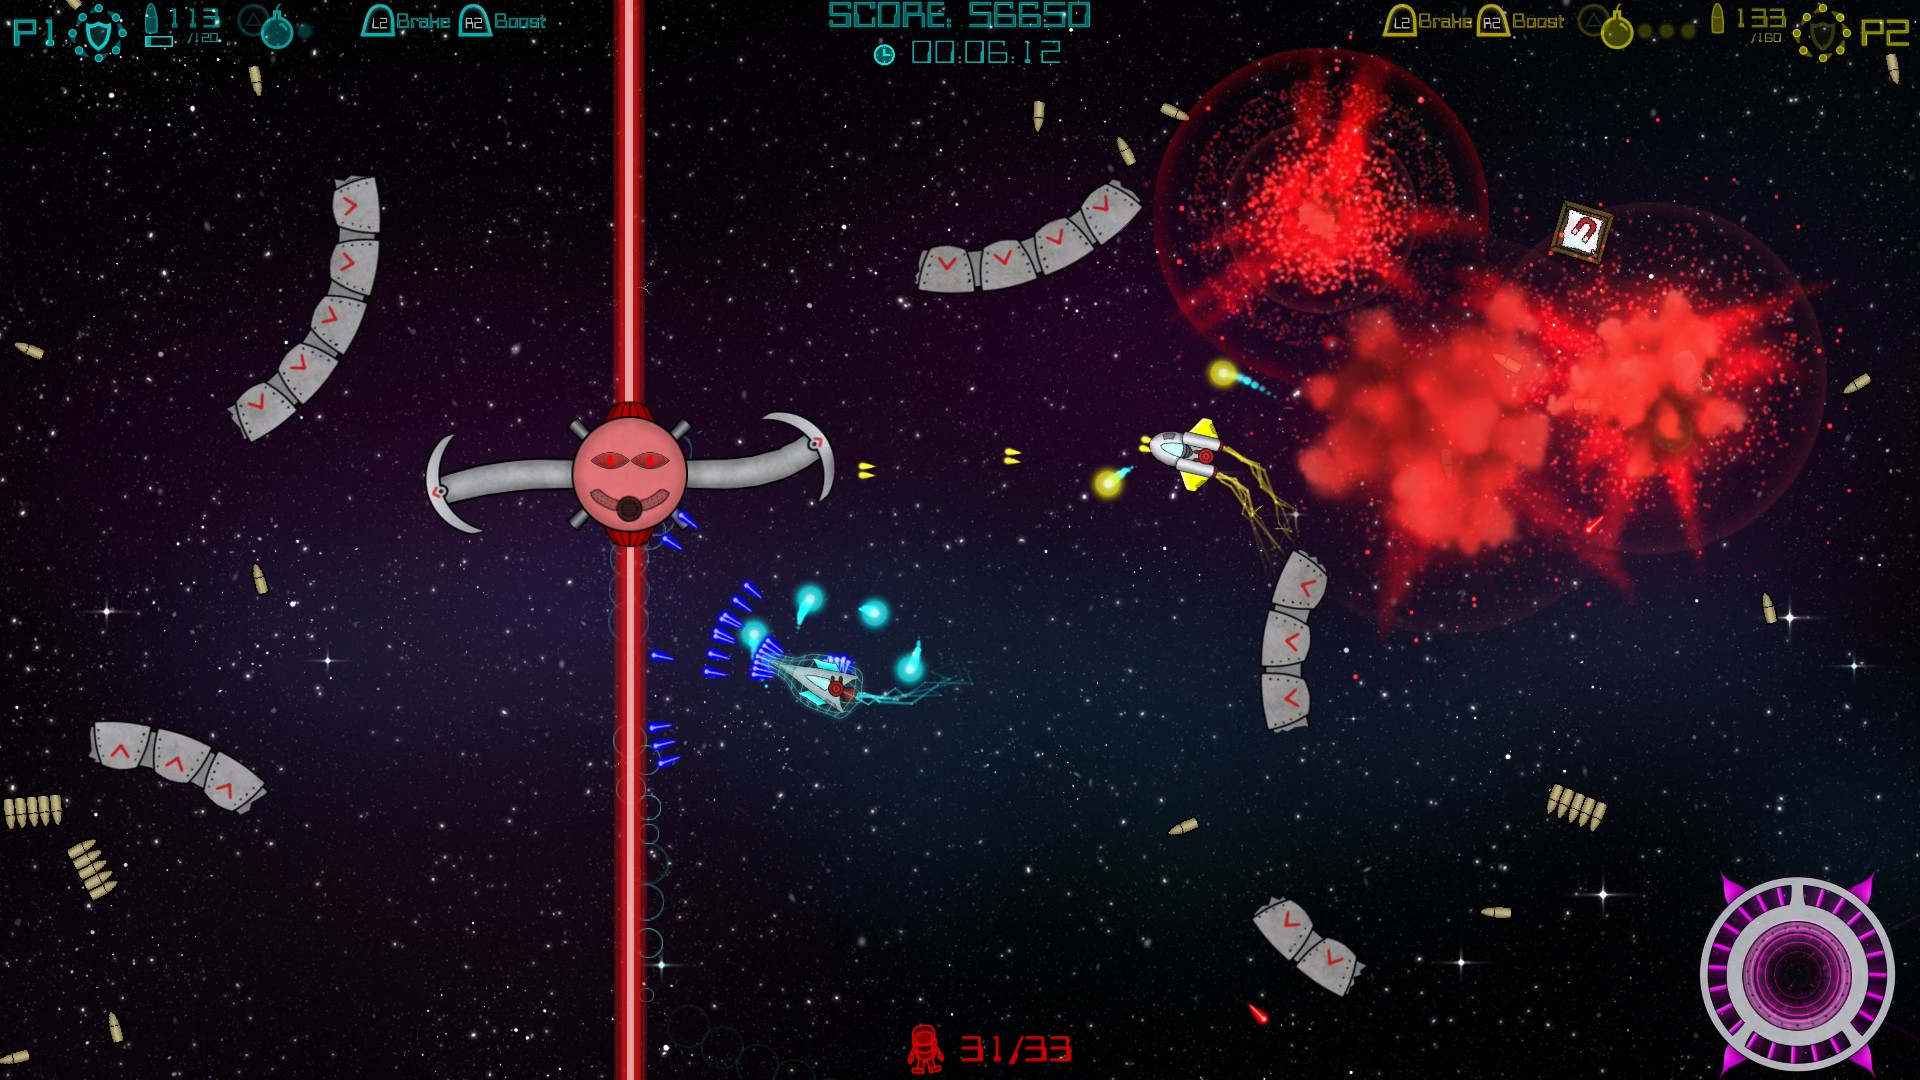 space blaster shooting game